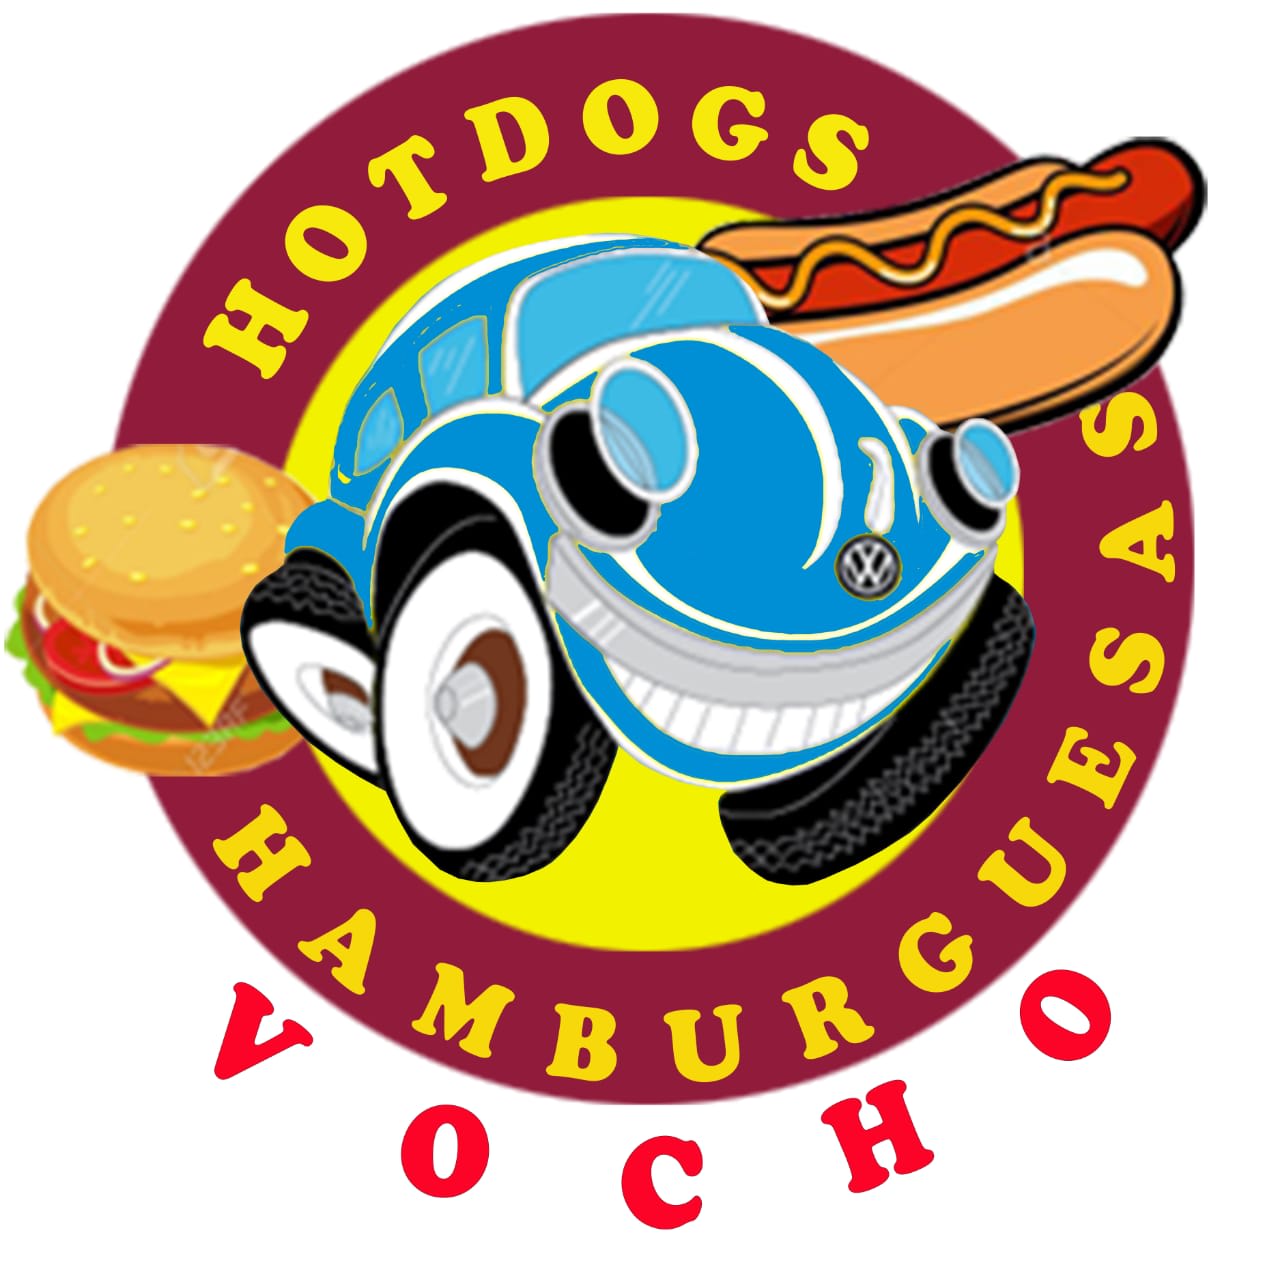 Hot Dogs y Hamburguesas Vocho